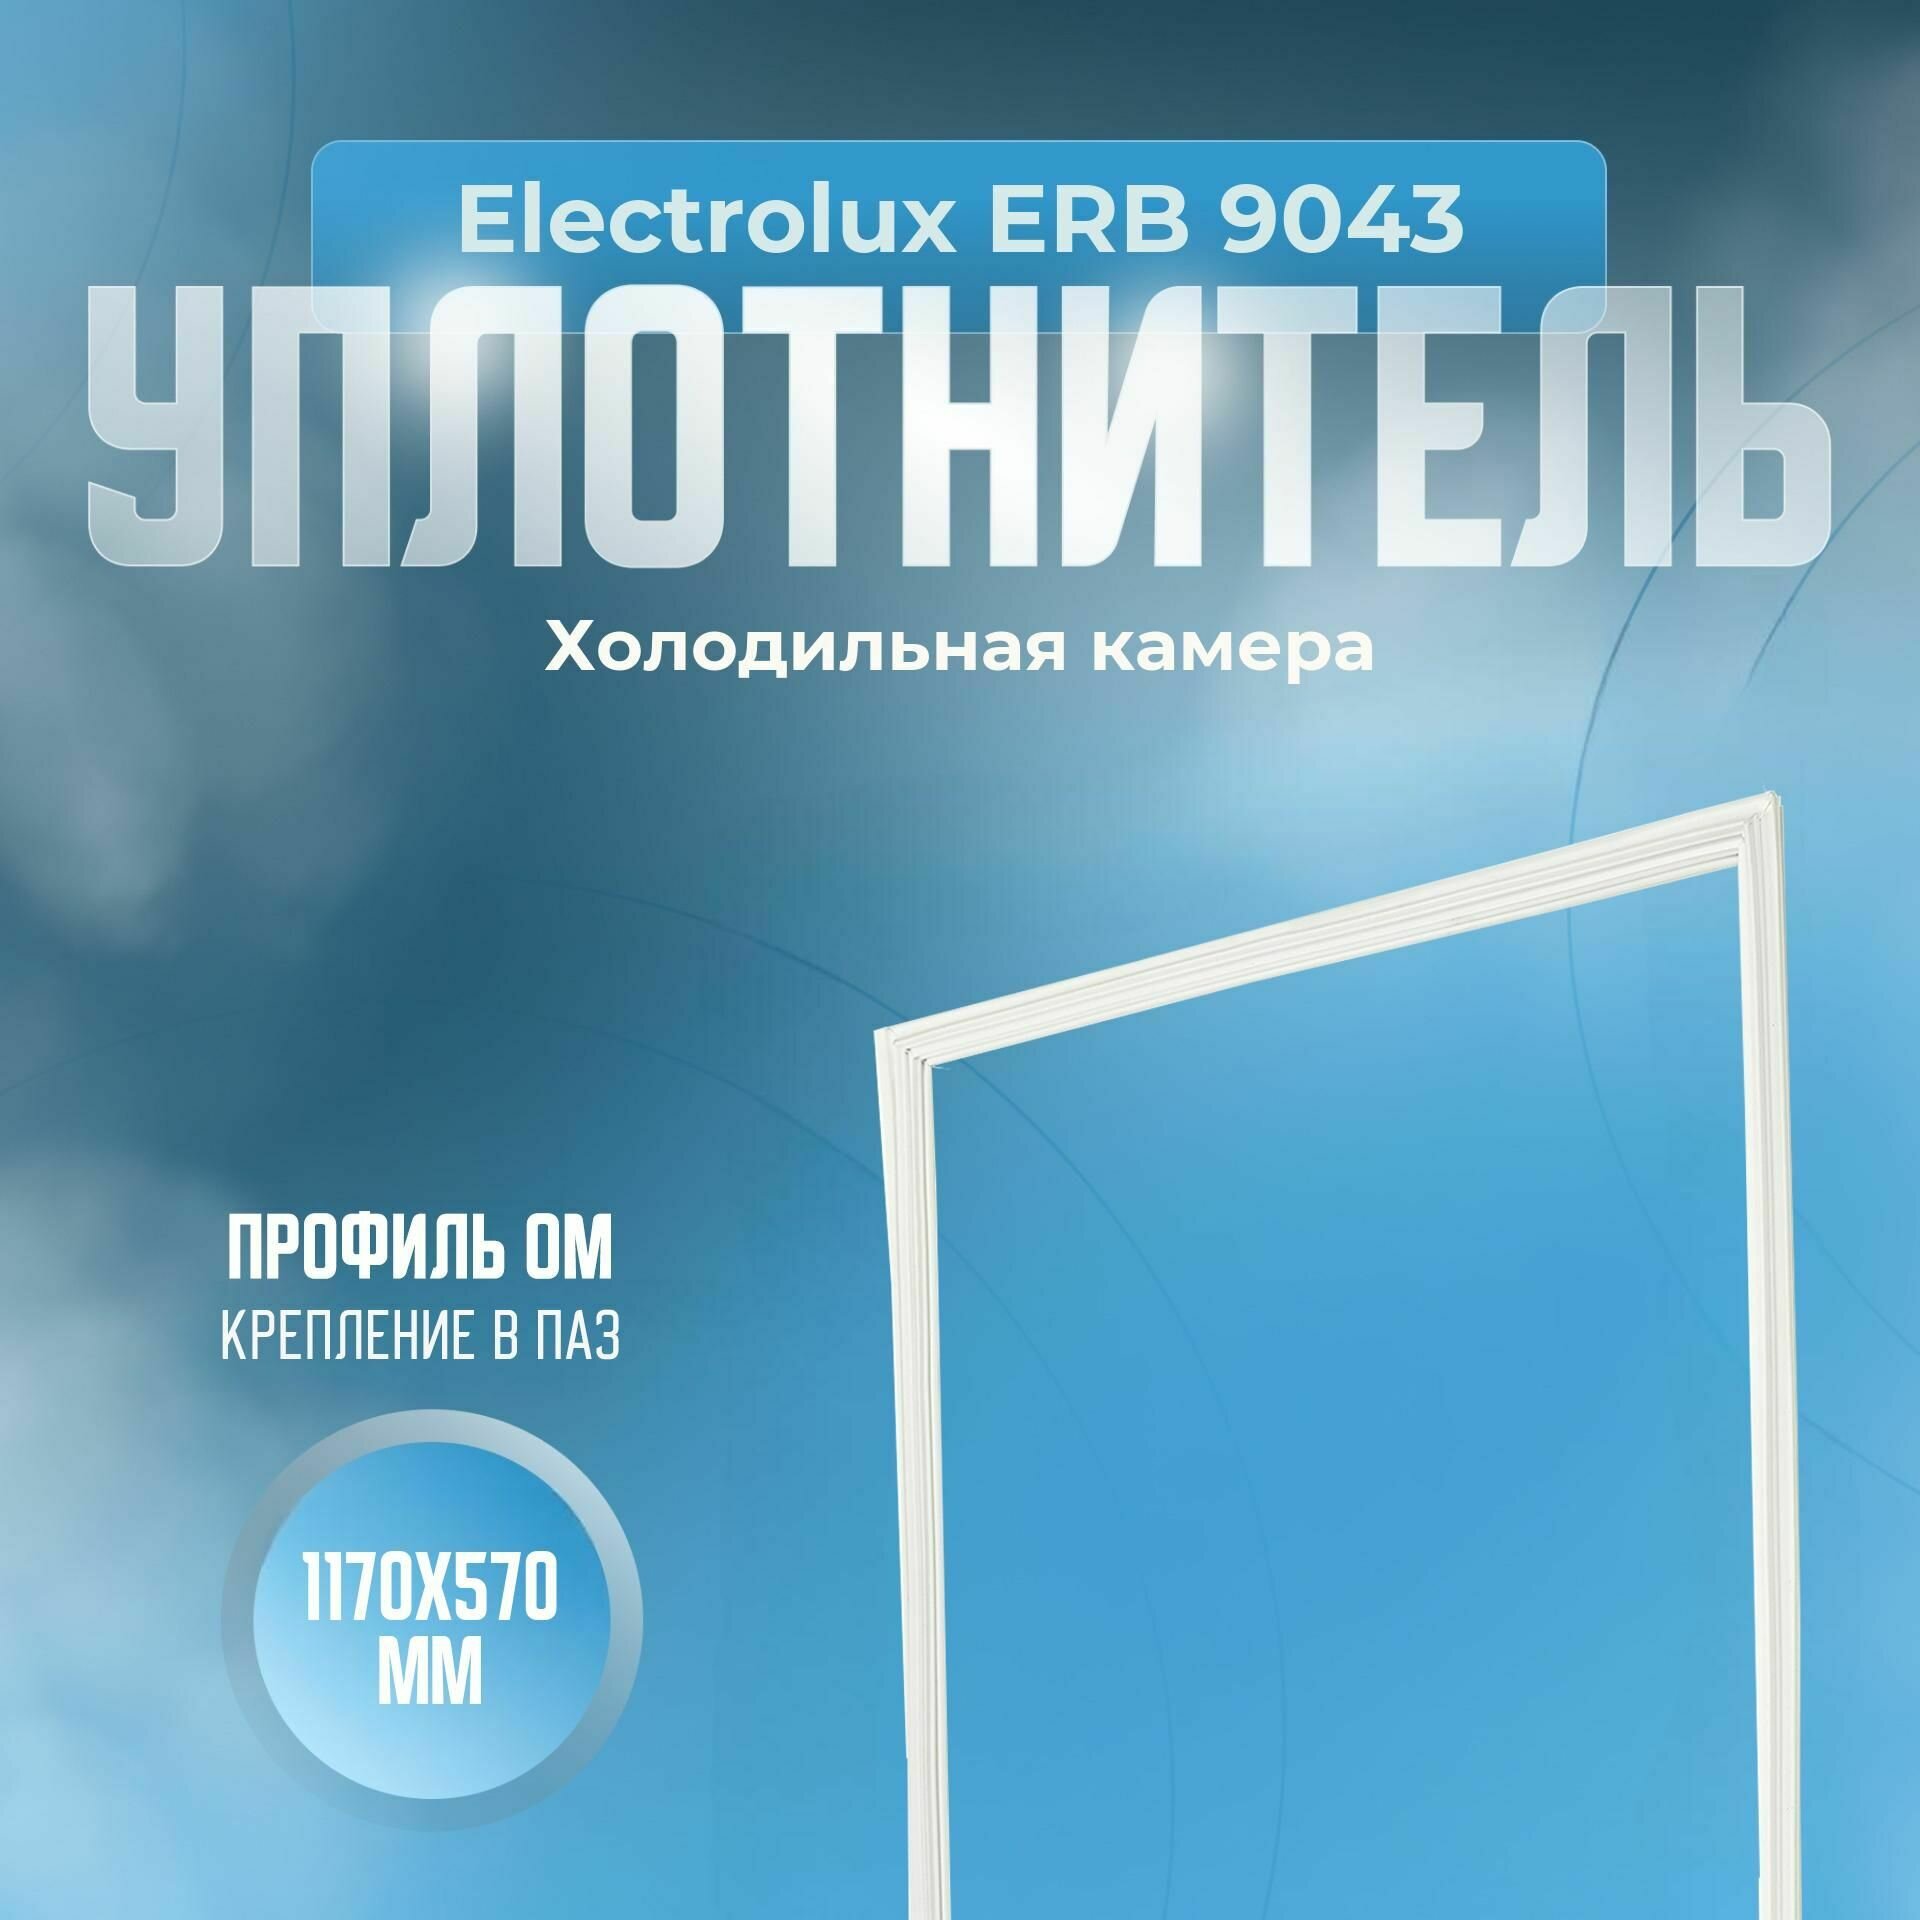 Уплотнитель Electrolux ERB 9043. х. к, Размер - 1170х570 мм. ОМ